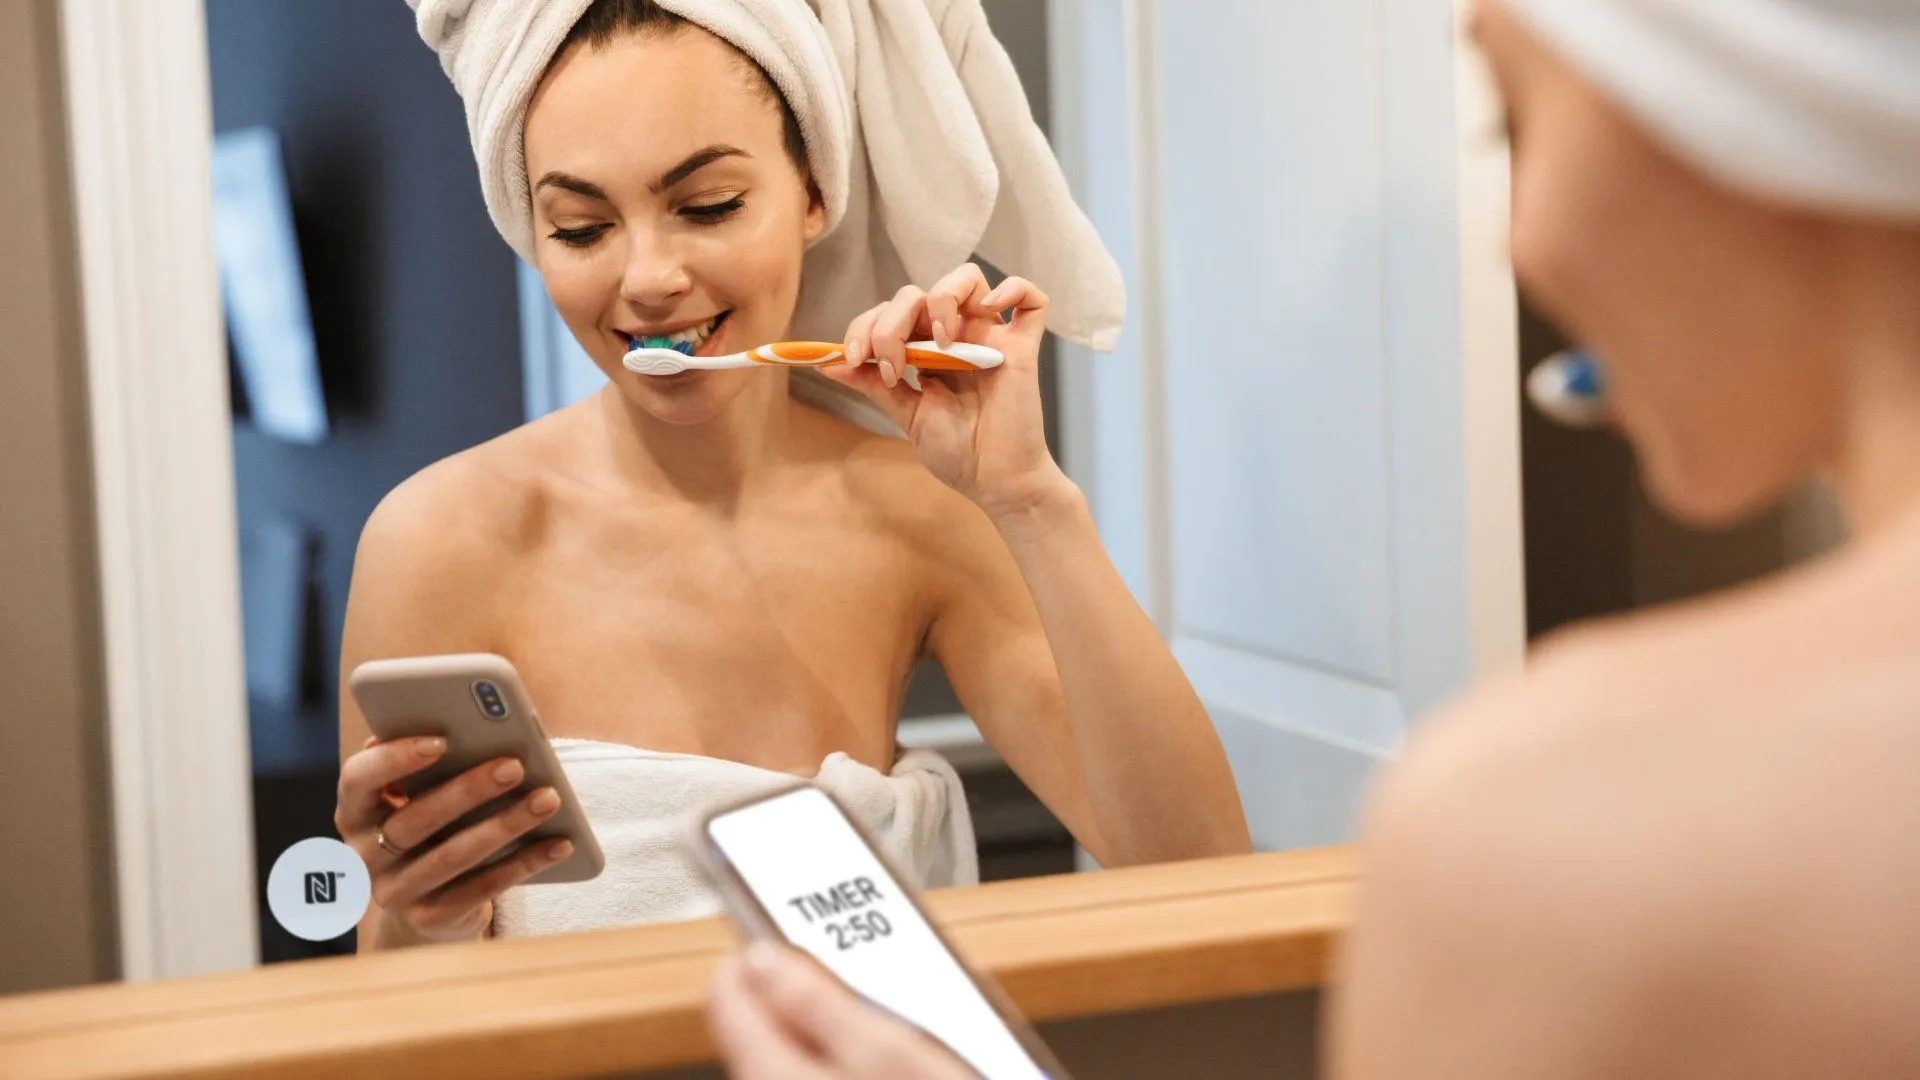 Create toothbrush timer via NFC